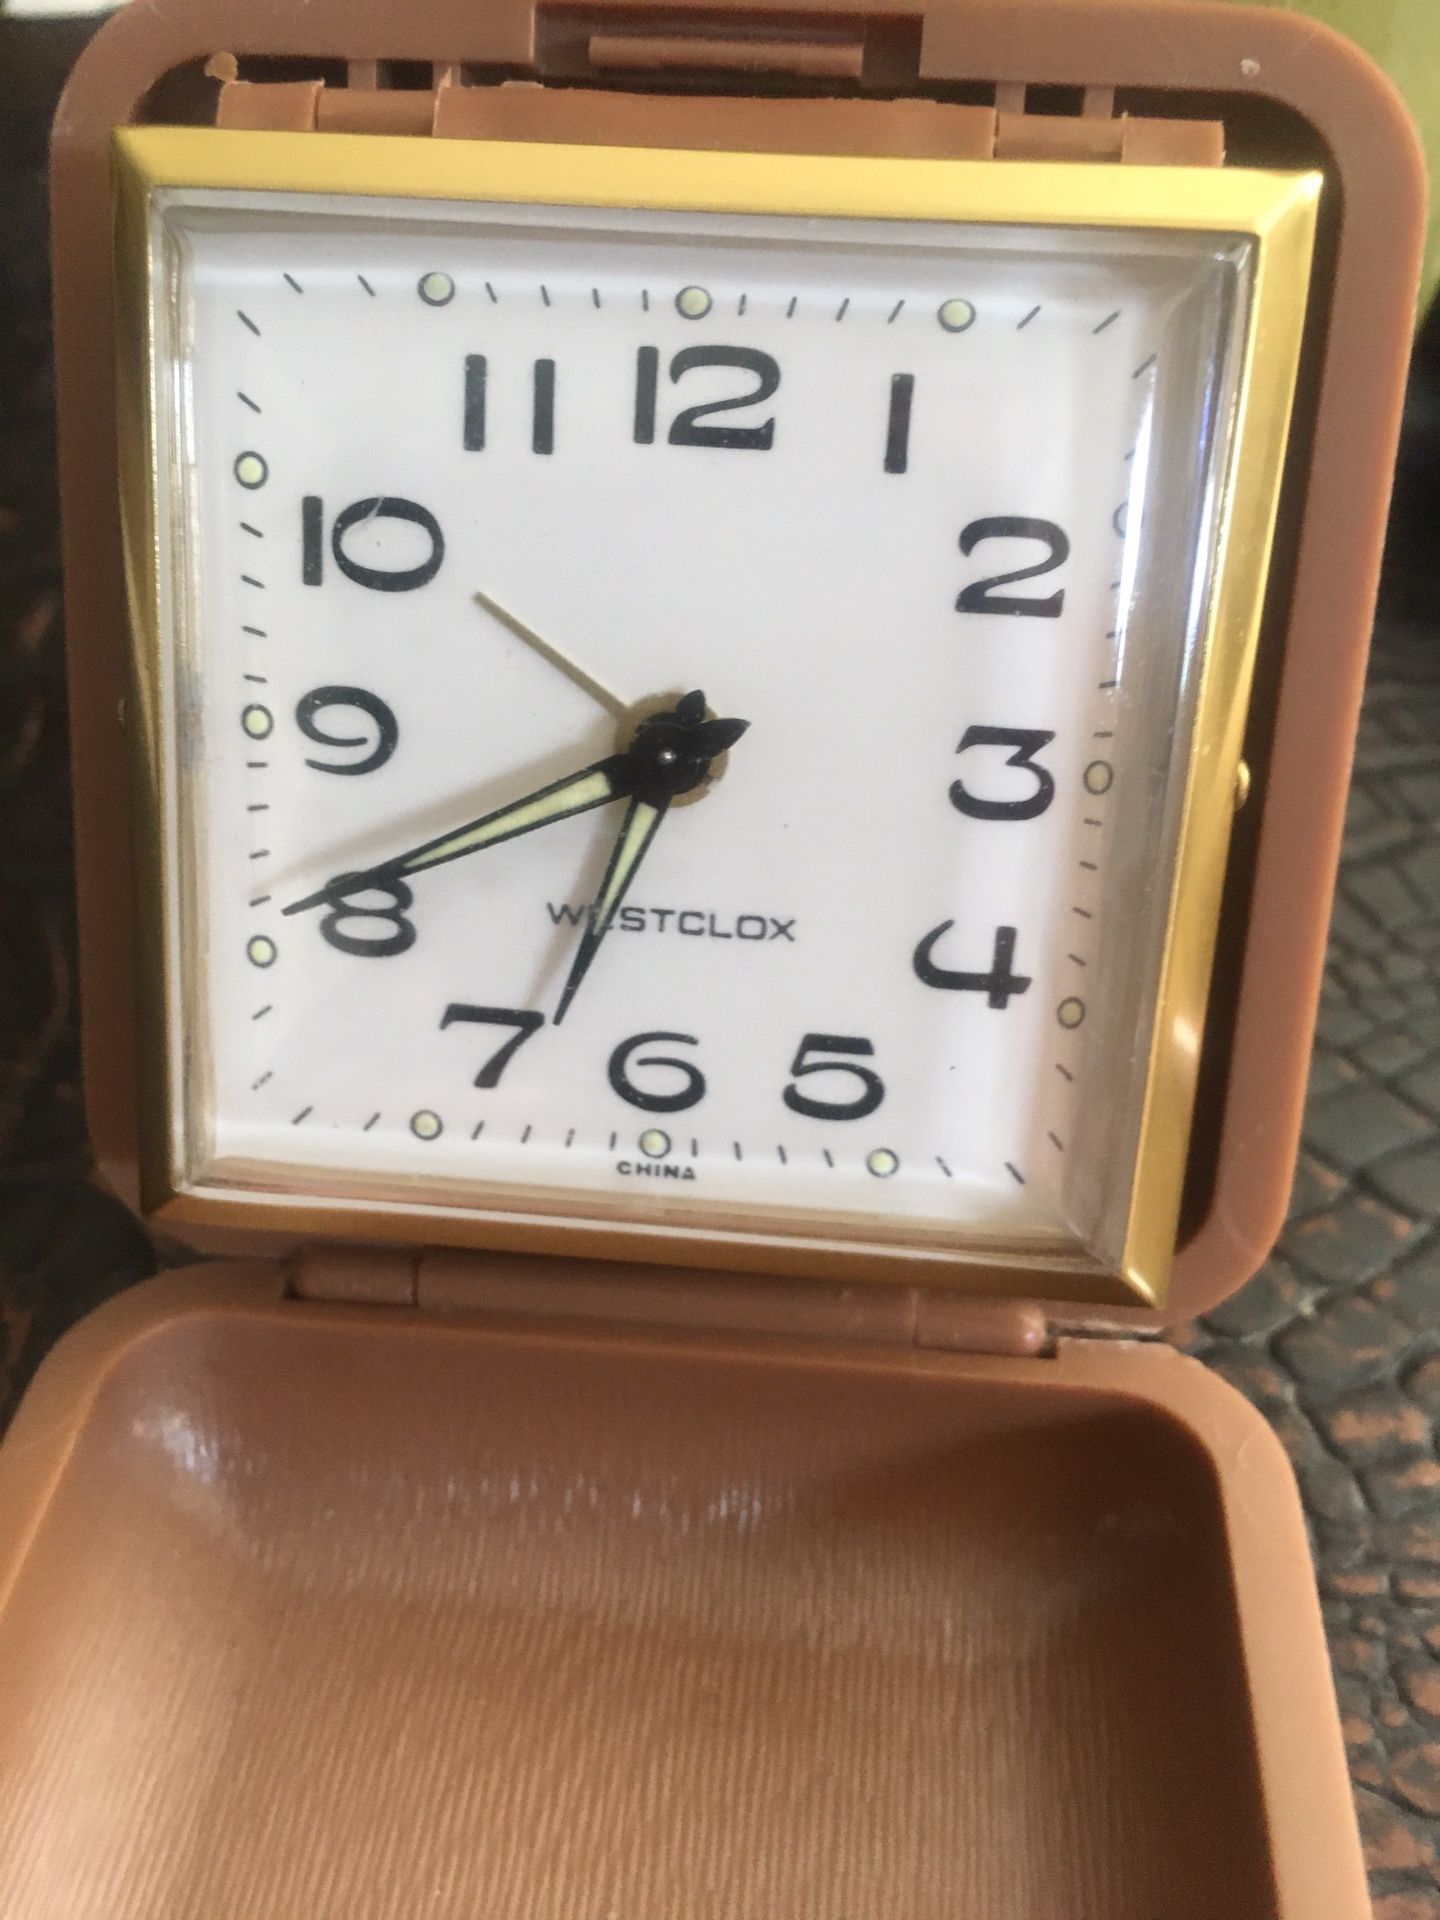 ALMOST FREE!! Vintage Westclox Travel Alarm Clock